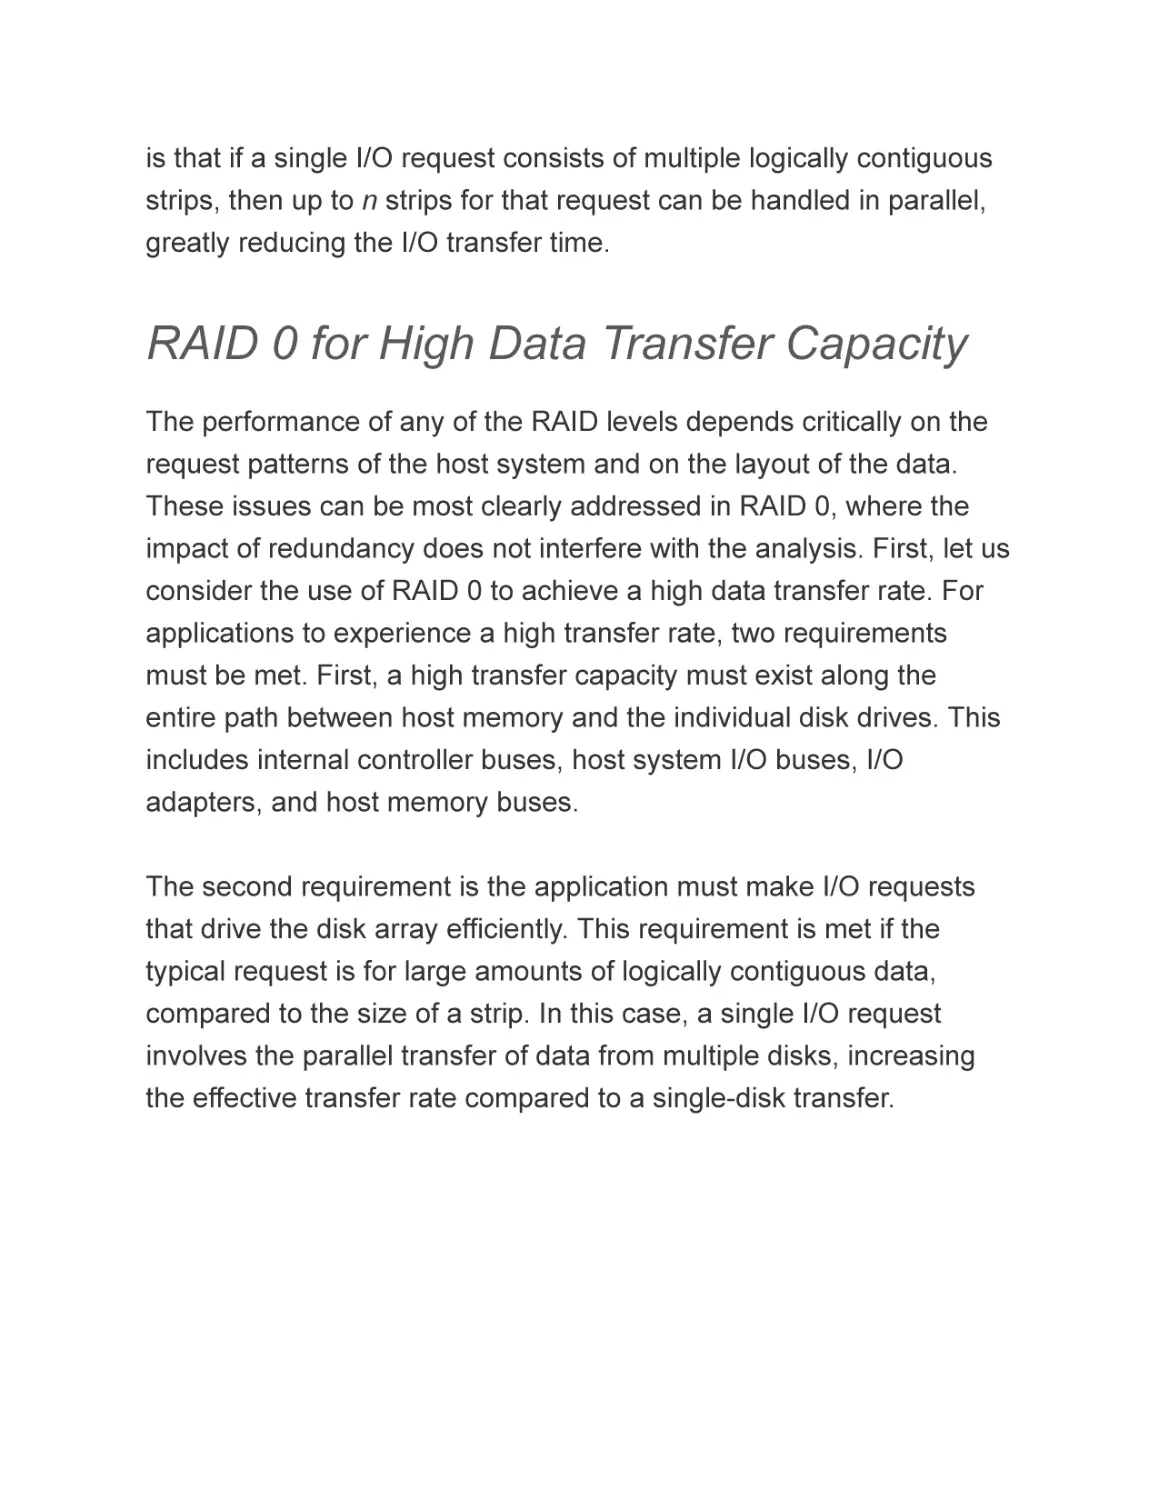 RAID 0 for High Data Transfer Capacity